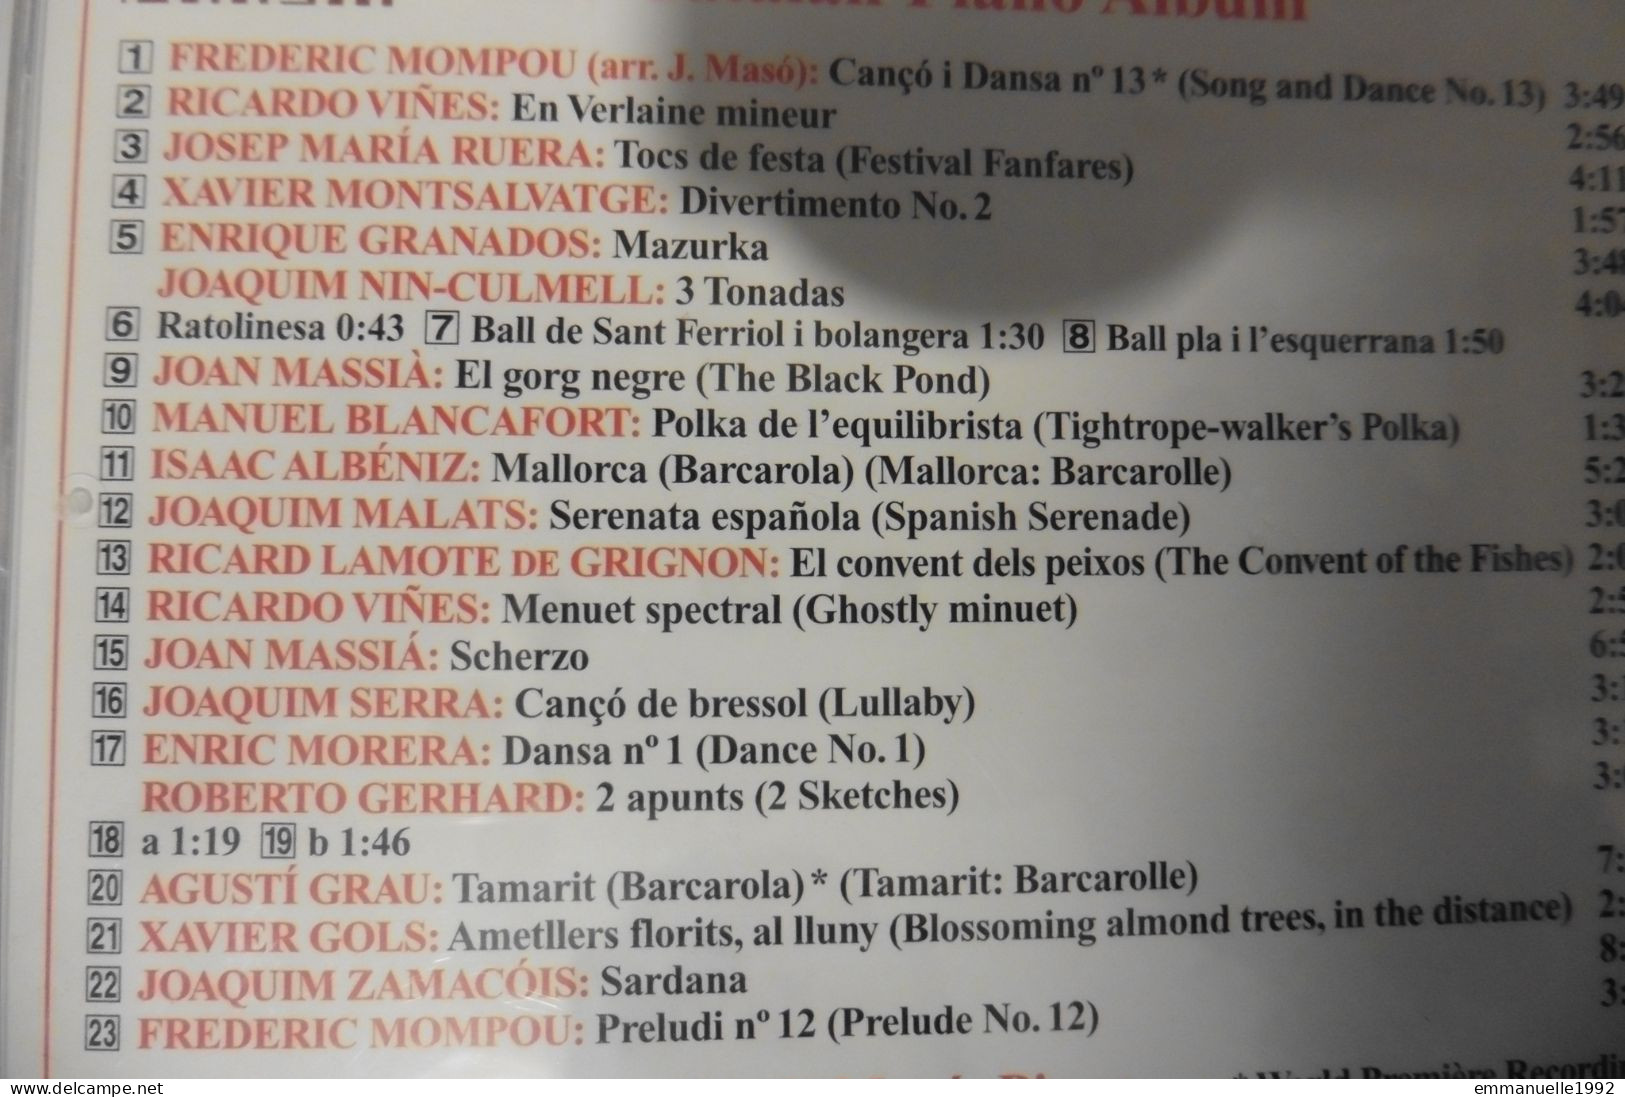 CD Spanish Classics The Catalan Piano Album Mompou Granados Albeniz Etc Naxos - RARE ! - Sonstige - Spanische Musik